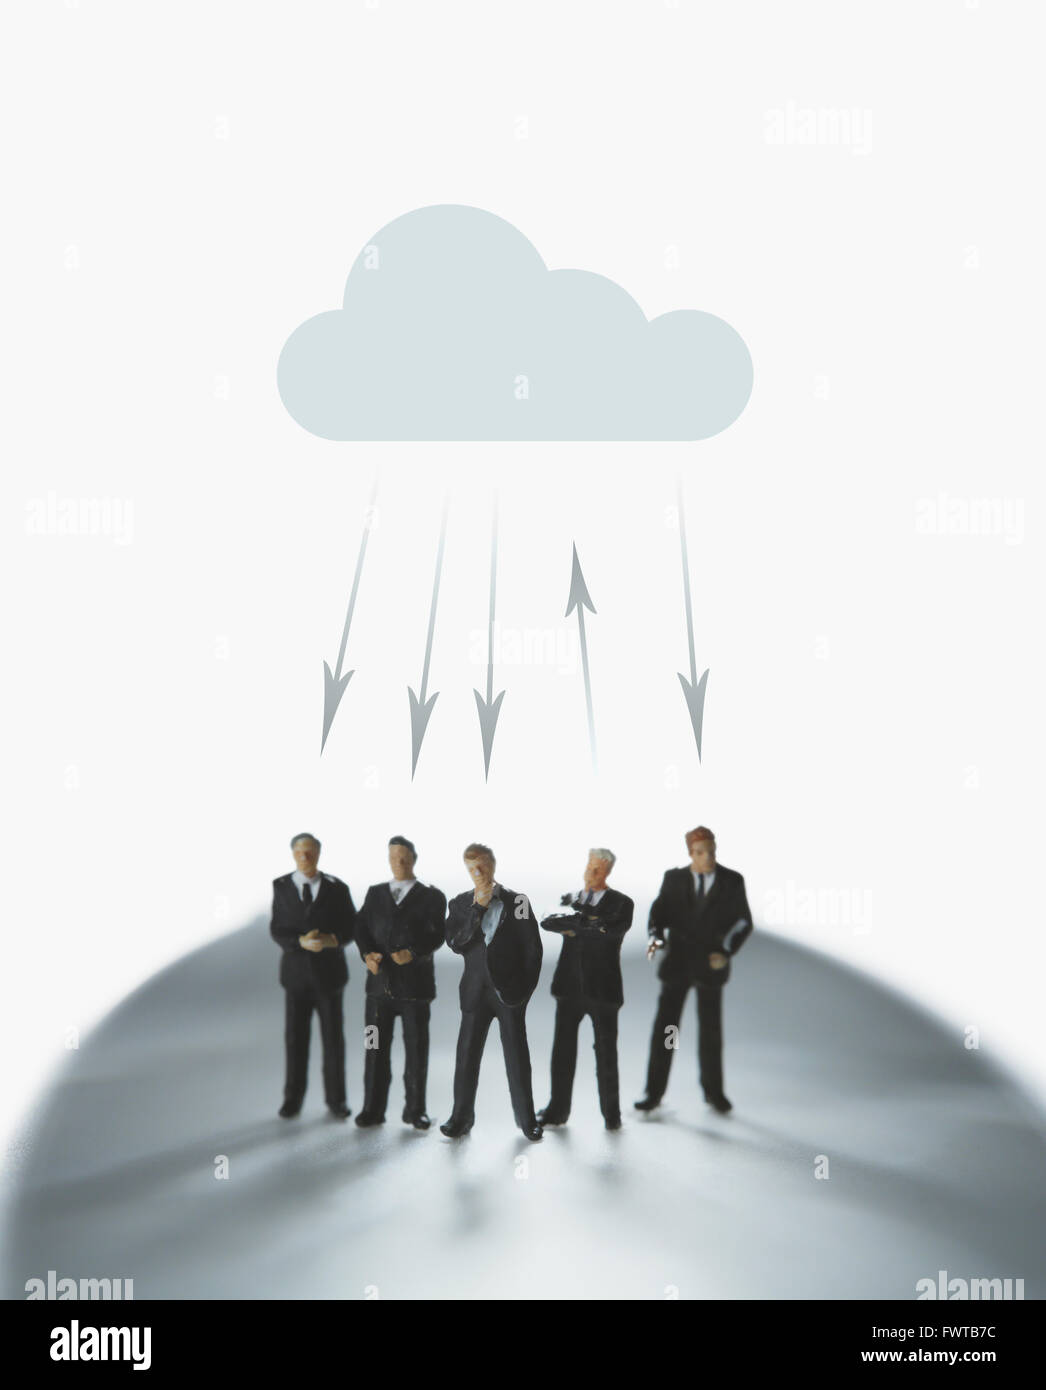 Cloud computing image Stock Photo